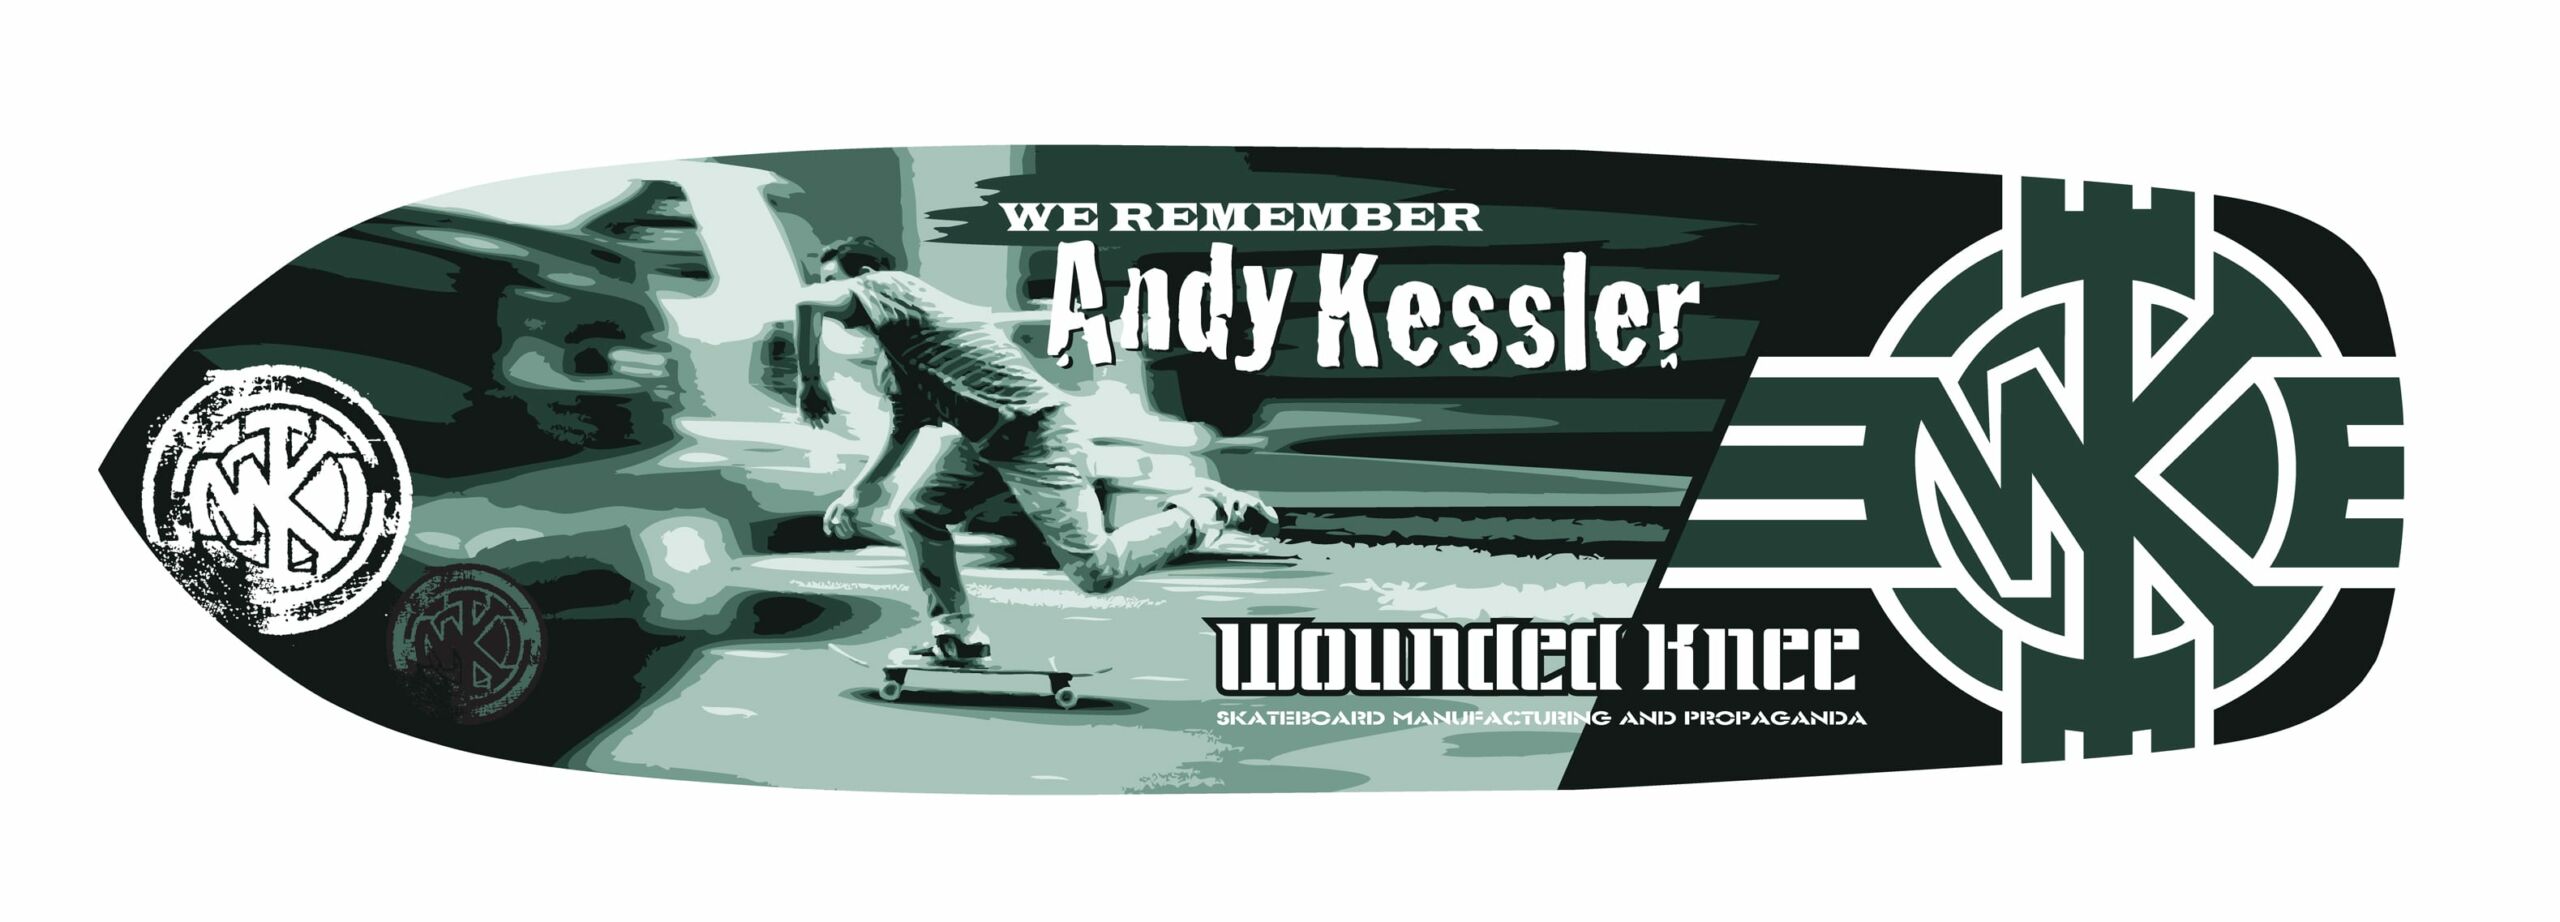 We Remember Andy Kessler Wounded Knee Deck